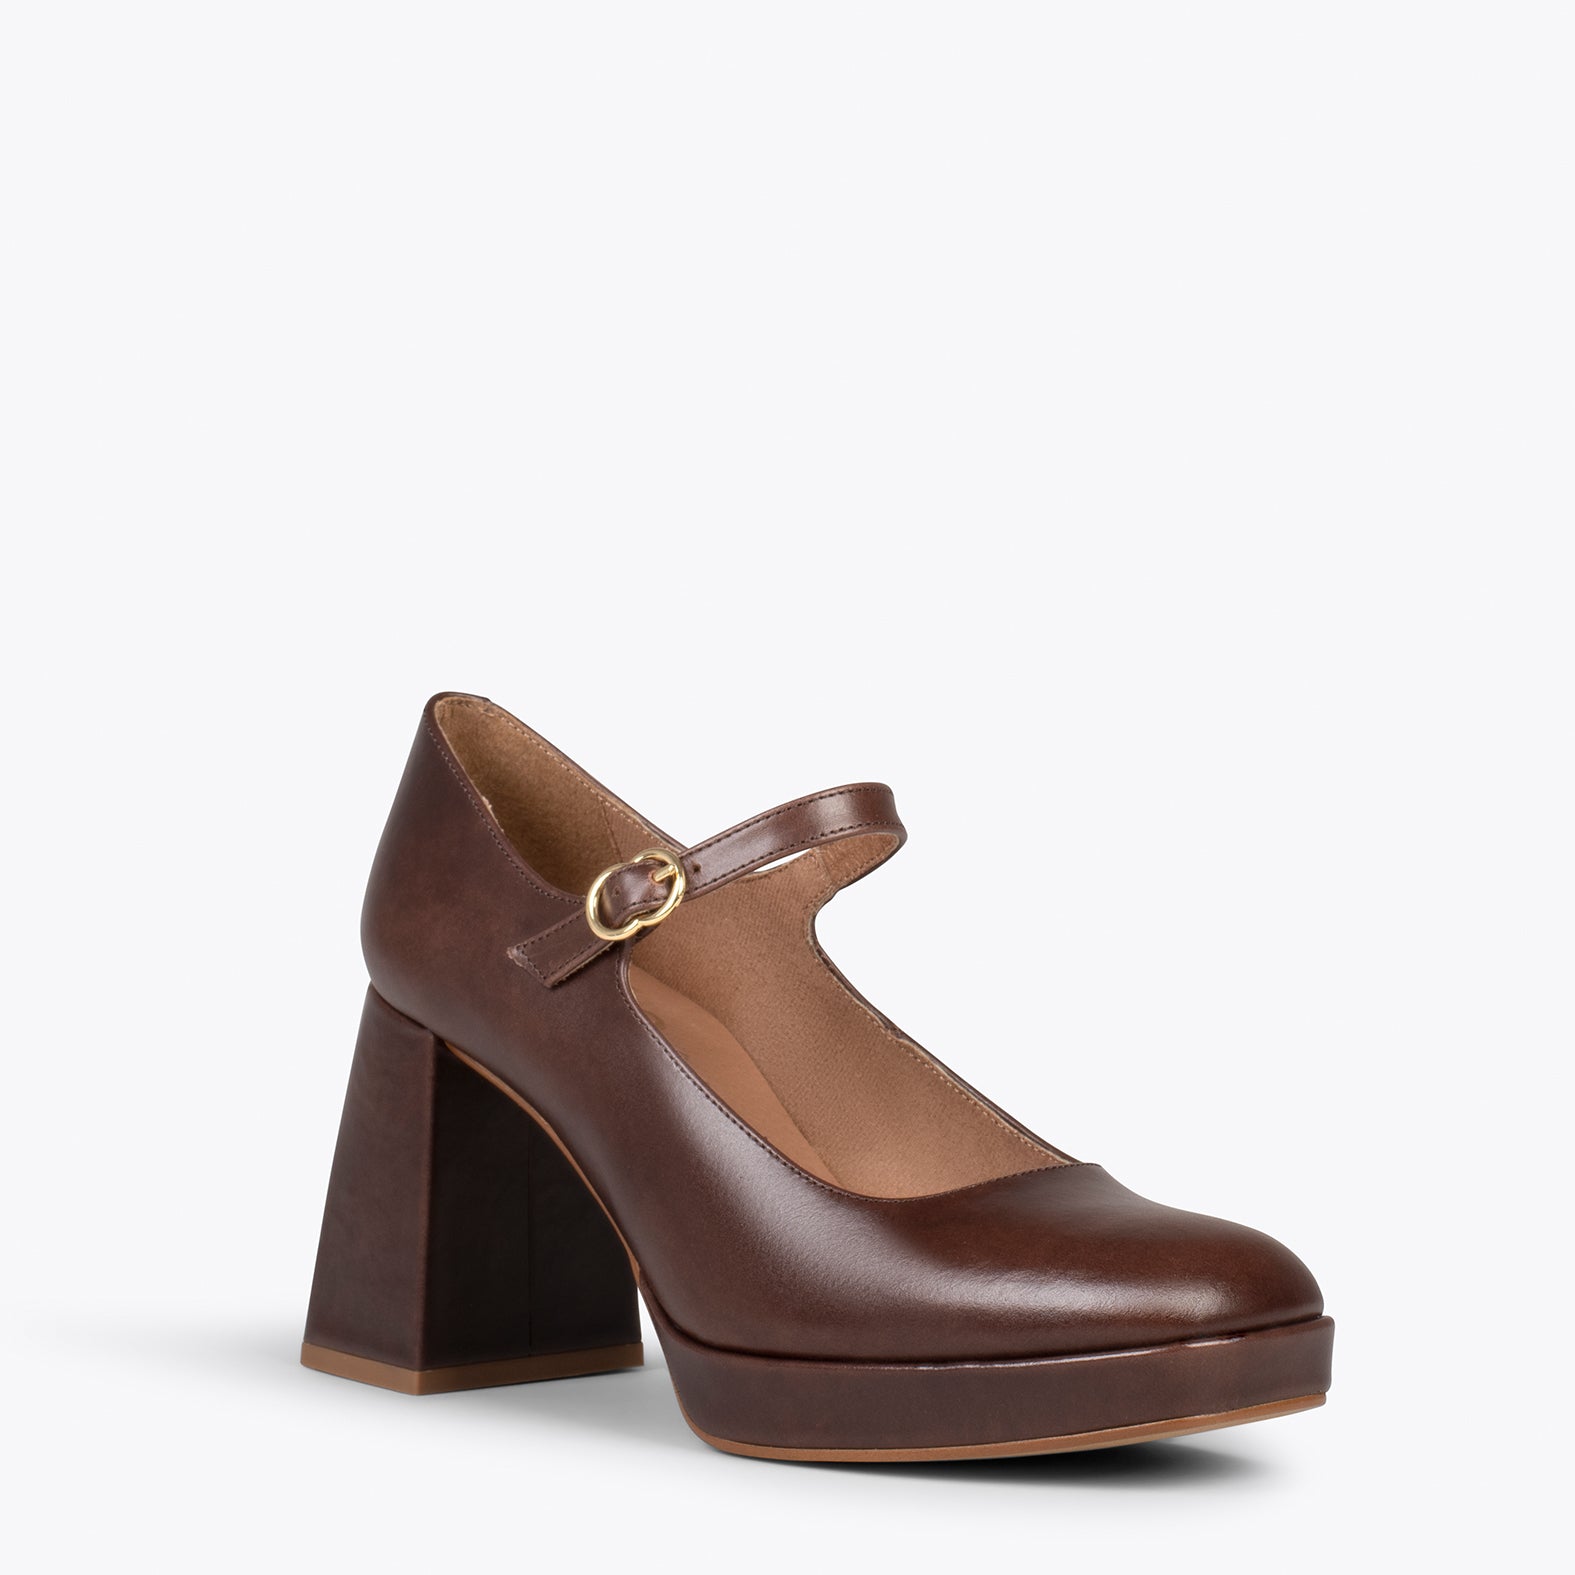 BRIGITTE – BROWN high heeled mary-jane shoe with platform